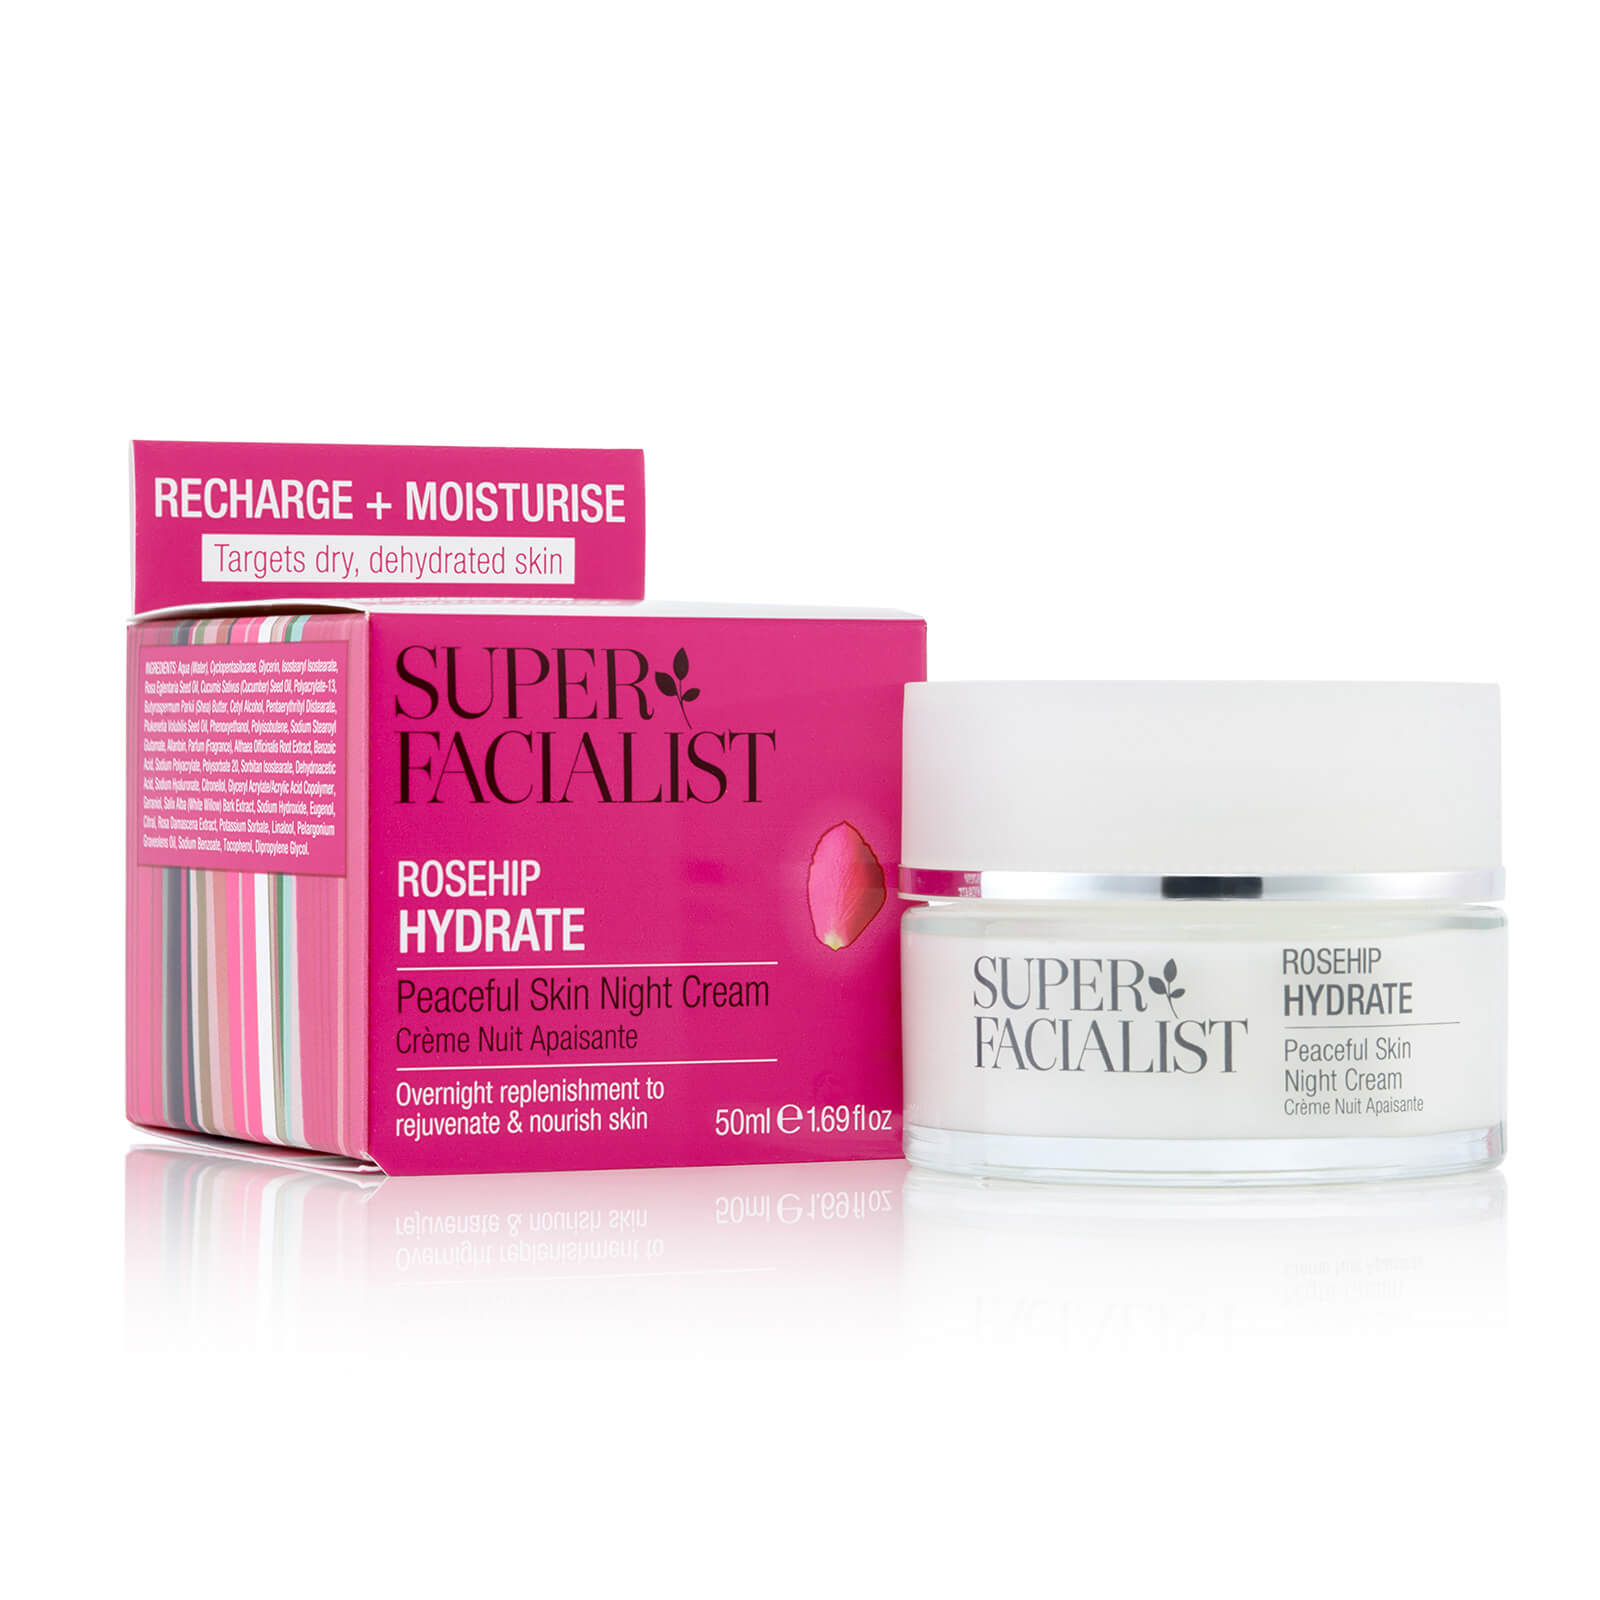 Super Facialist Rosehip Hydrate Peaceful Skin Night Cream - 50ml